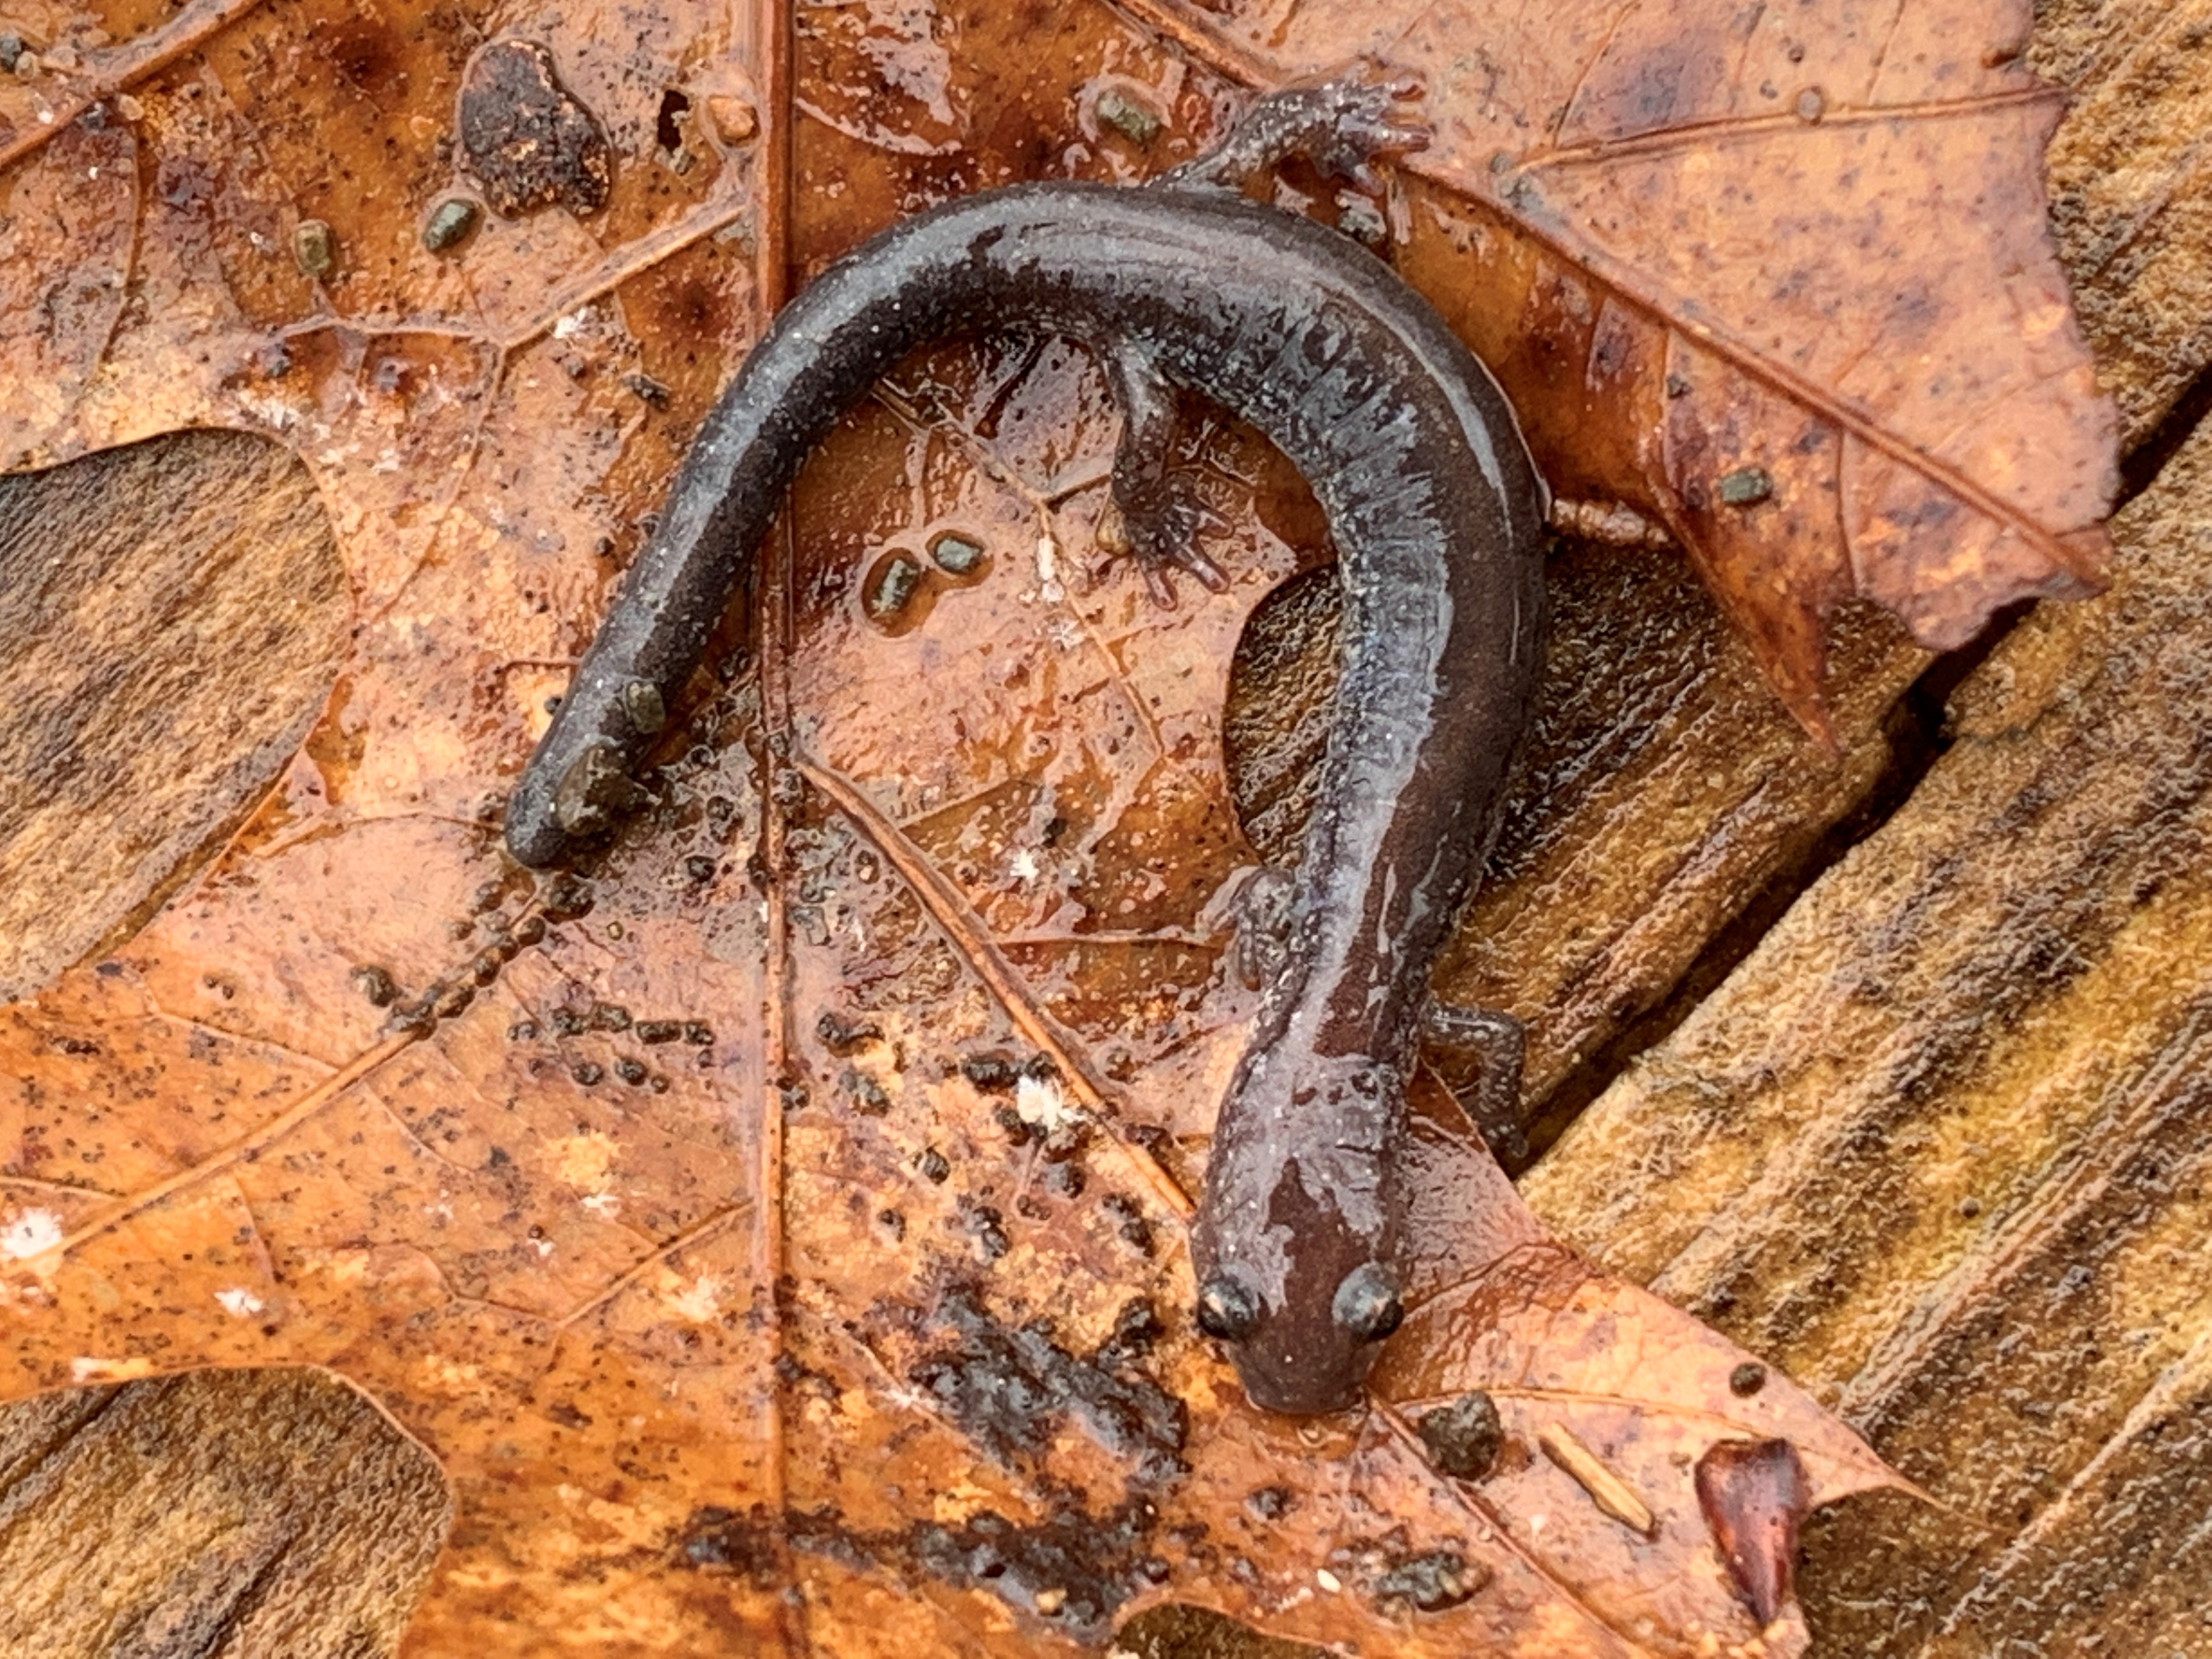 Small, red-backed salamander on an orange leaf.